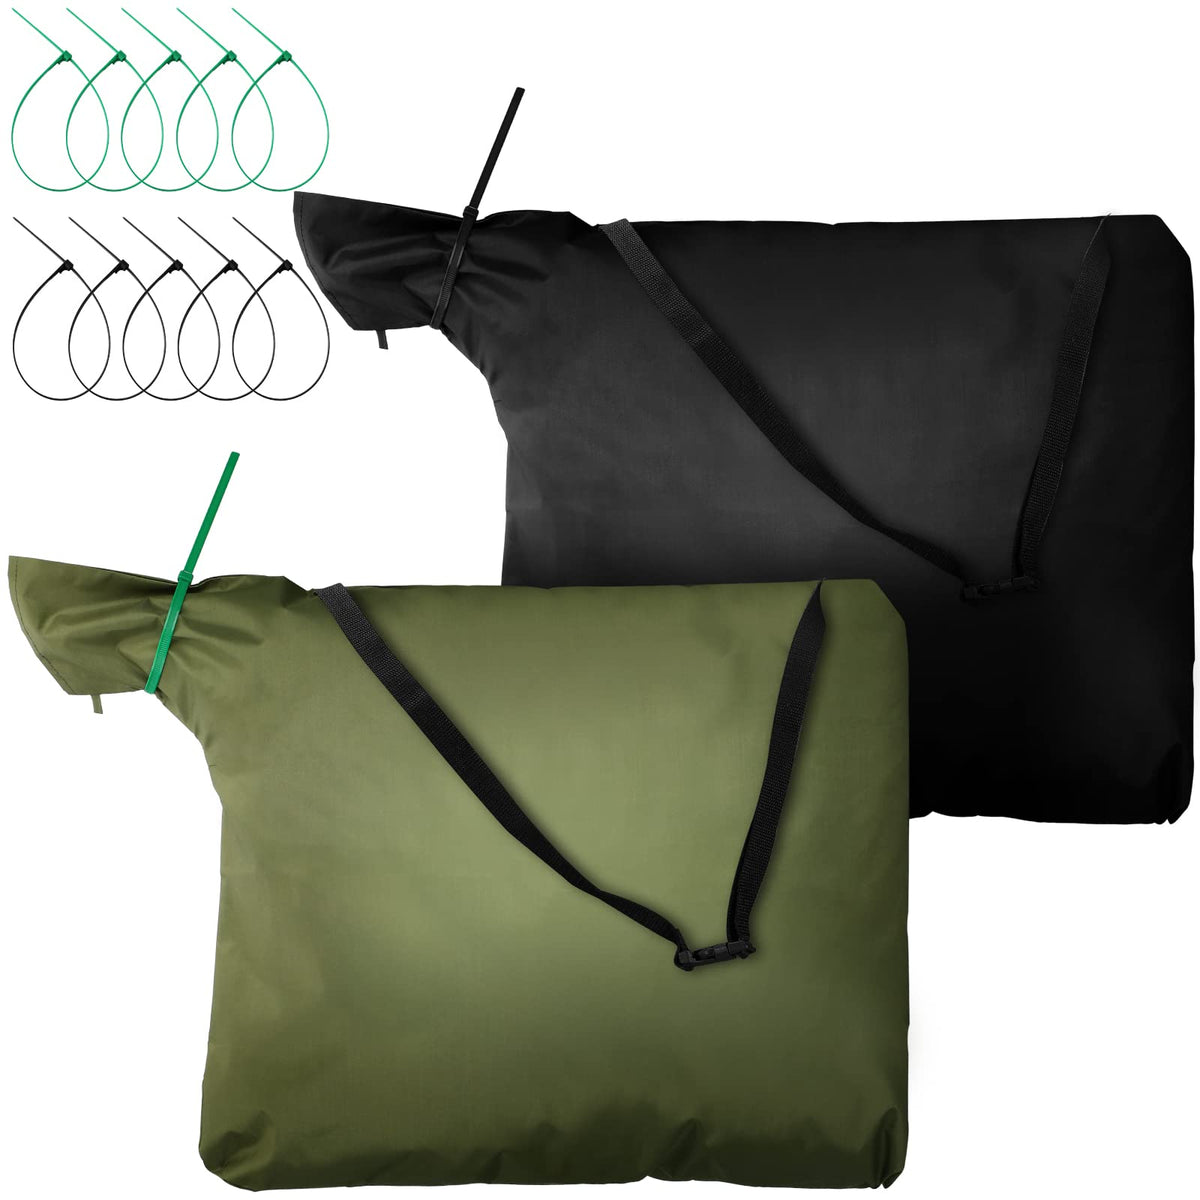 Leaf Blower Vacuum Shoulder Bag Compatible with Black & Decker Replacement  Leaf